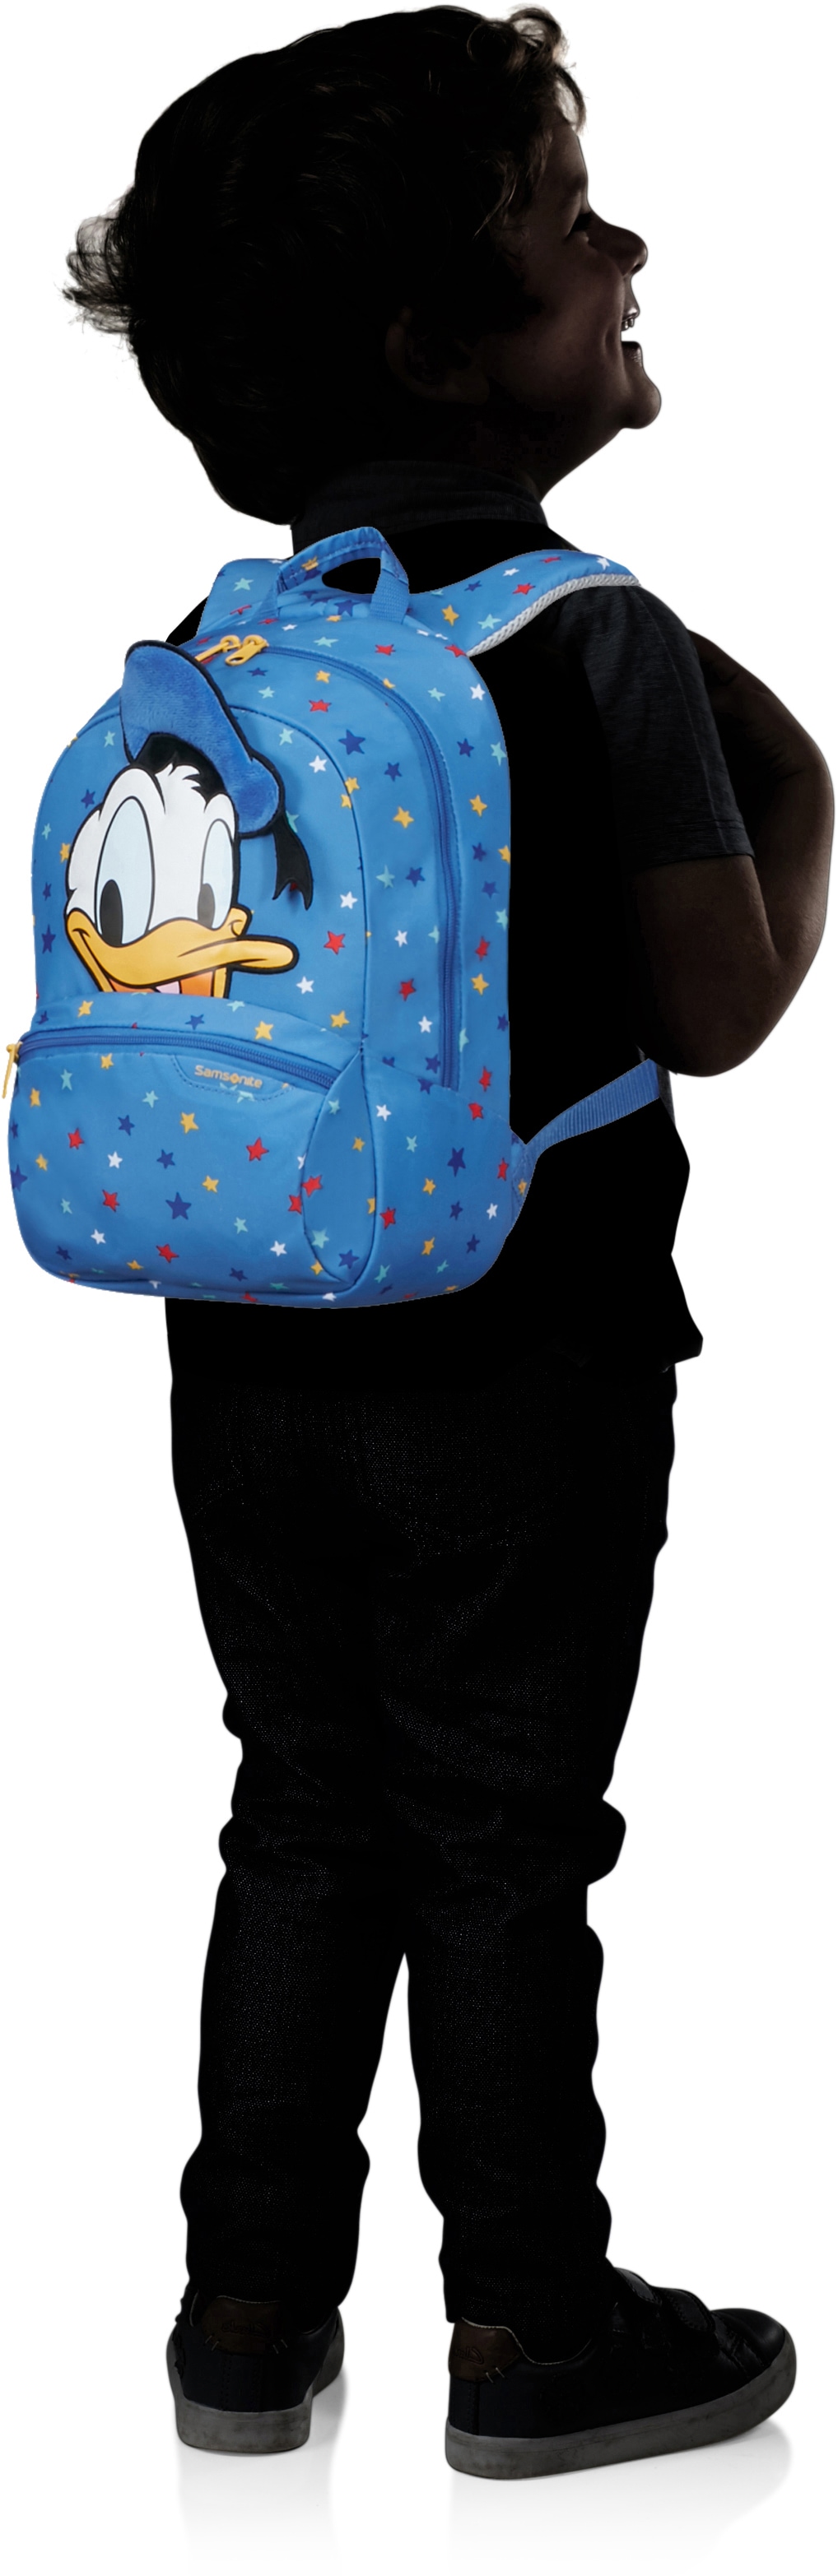 | 2.0, Samsonite Donald »Disney BAUR Details Stars«, reflektierende S+, Kinderrucksack kaufen Ultimate